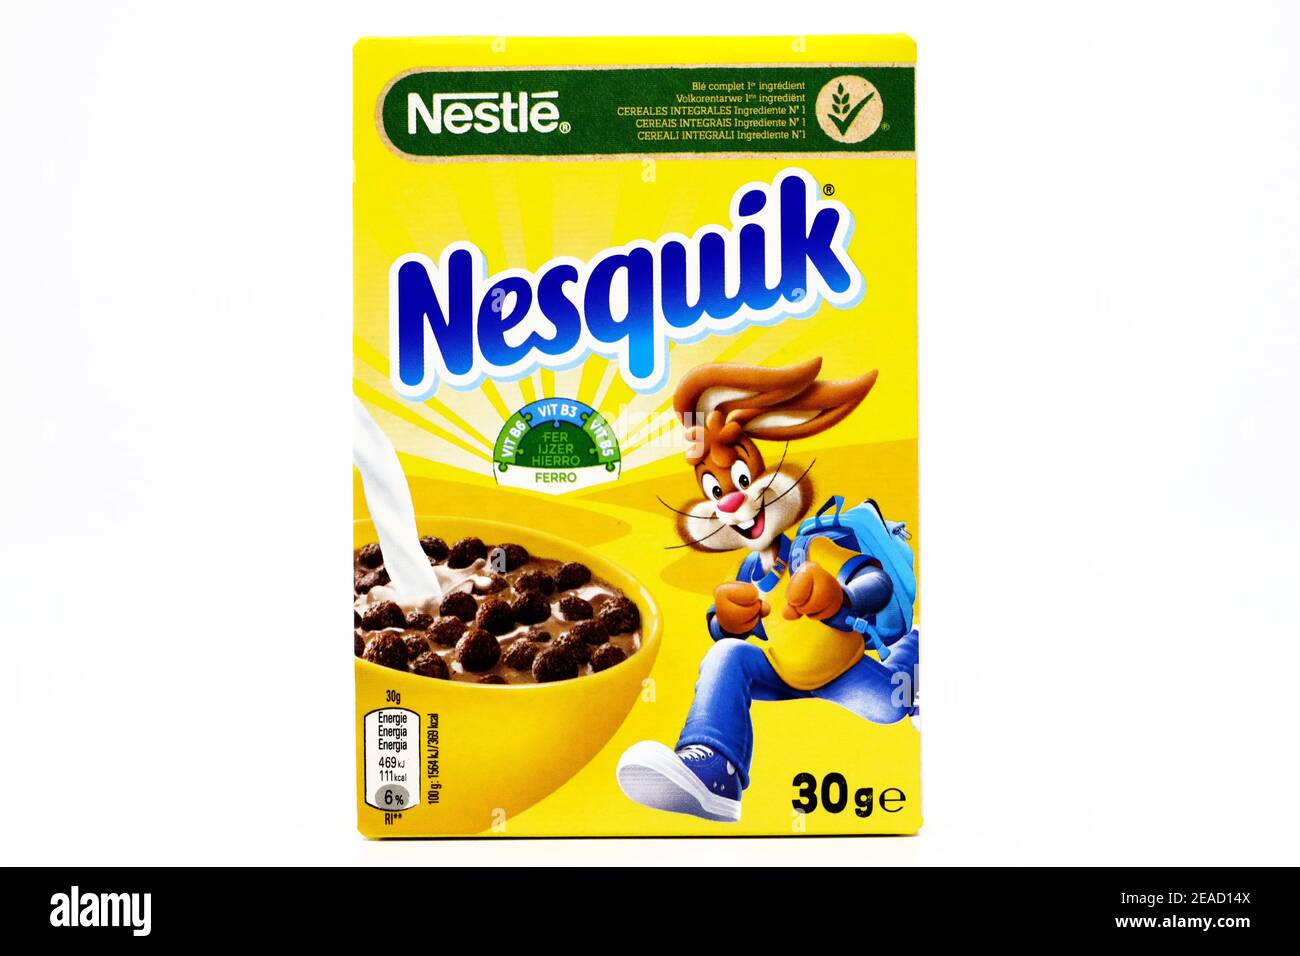 NESQUIK Nestlé Cereals box Stock Photo - Alamy